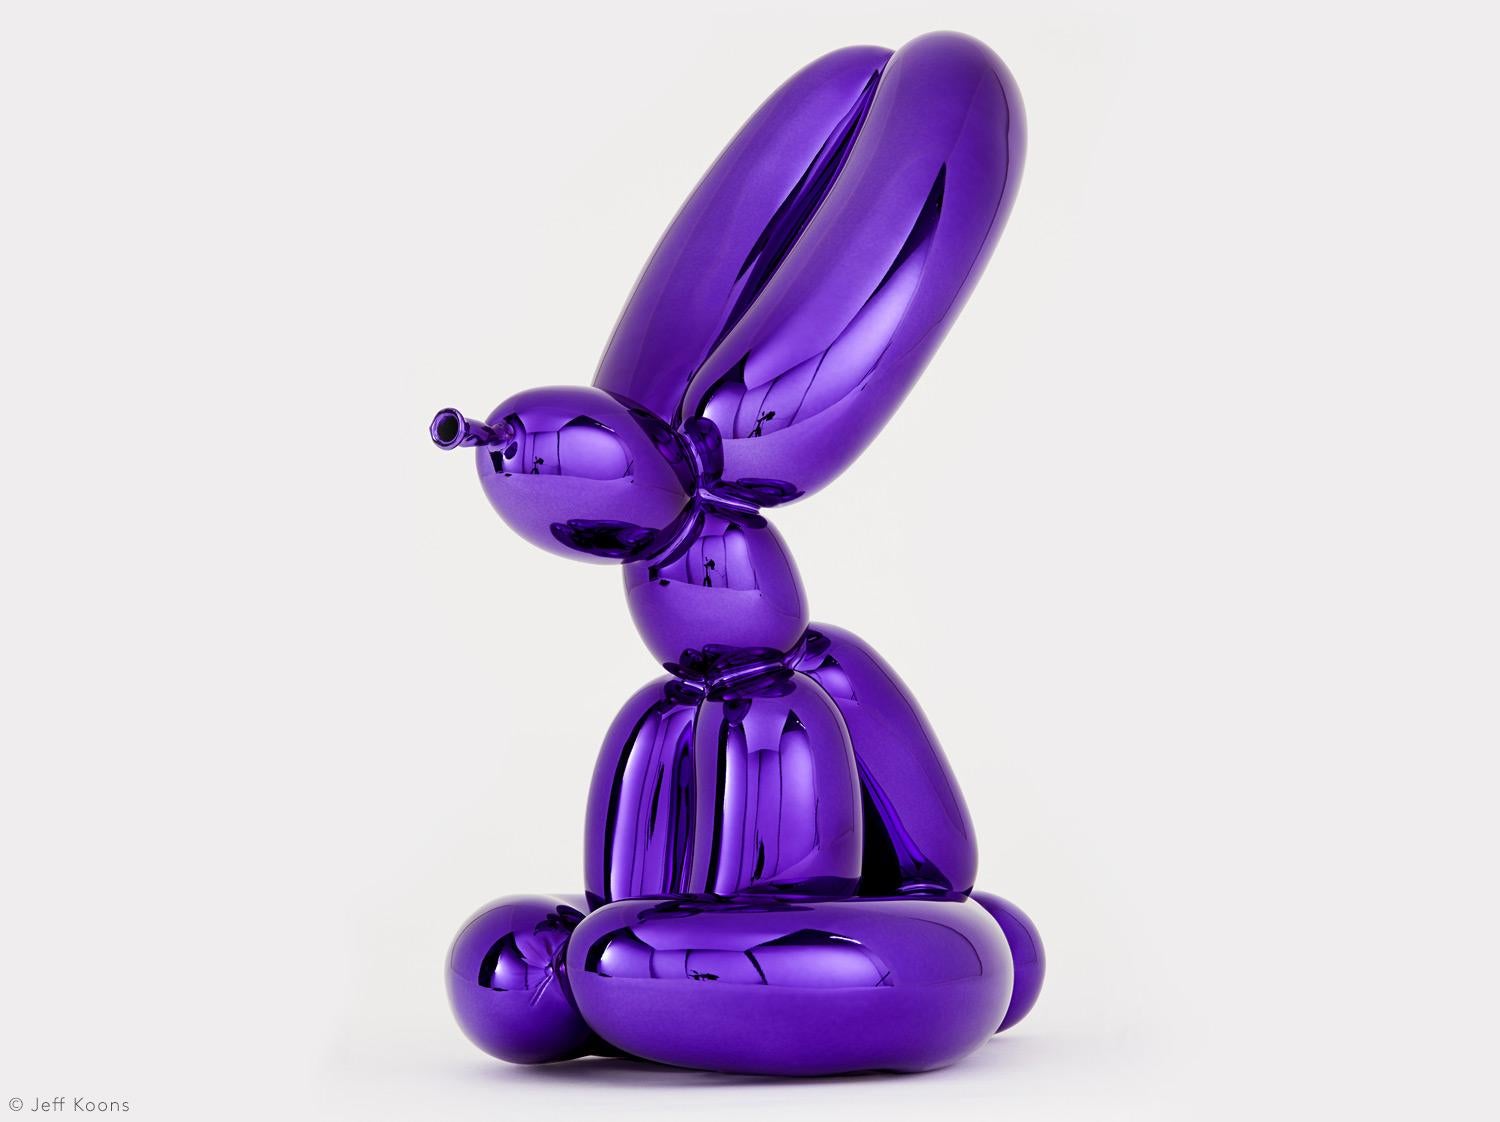 Jeff Koons Figurative Sculpture - Balloon Rabbit (Violet) 